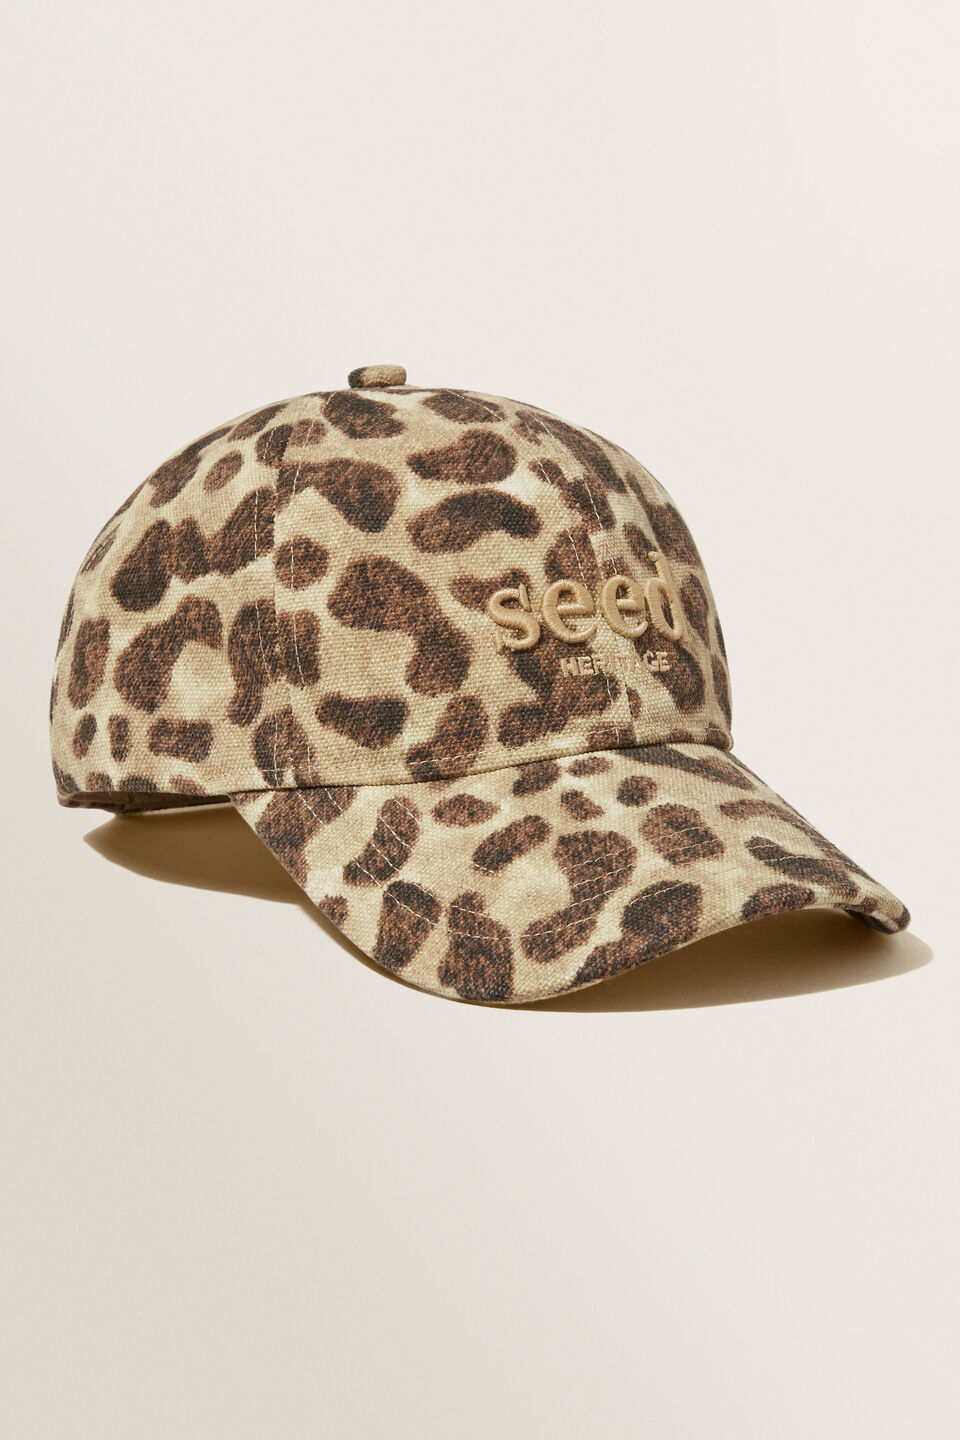 Seed Cap  Leopard